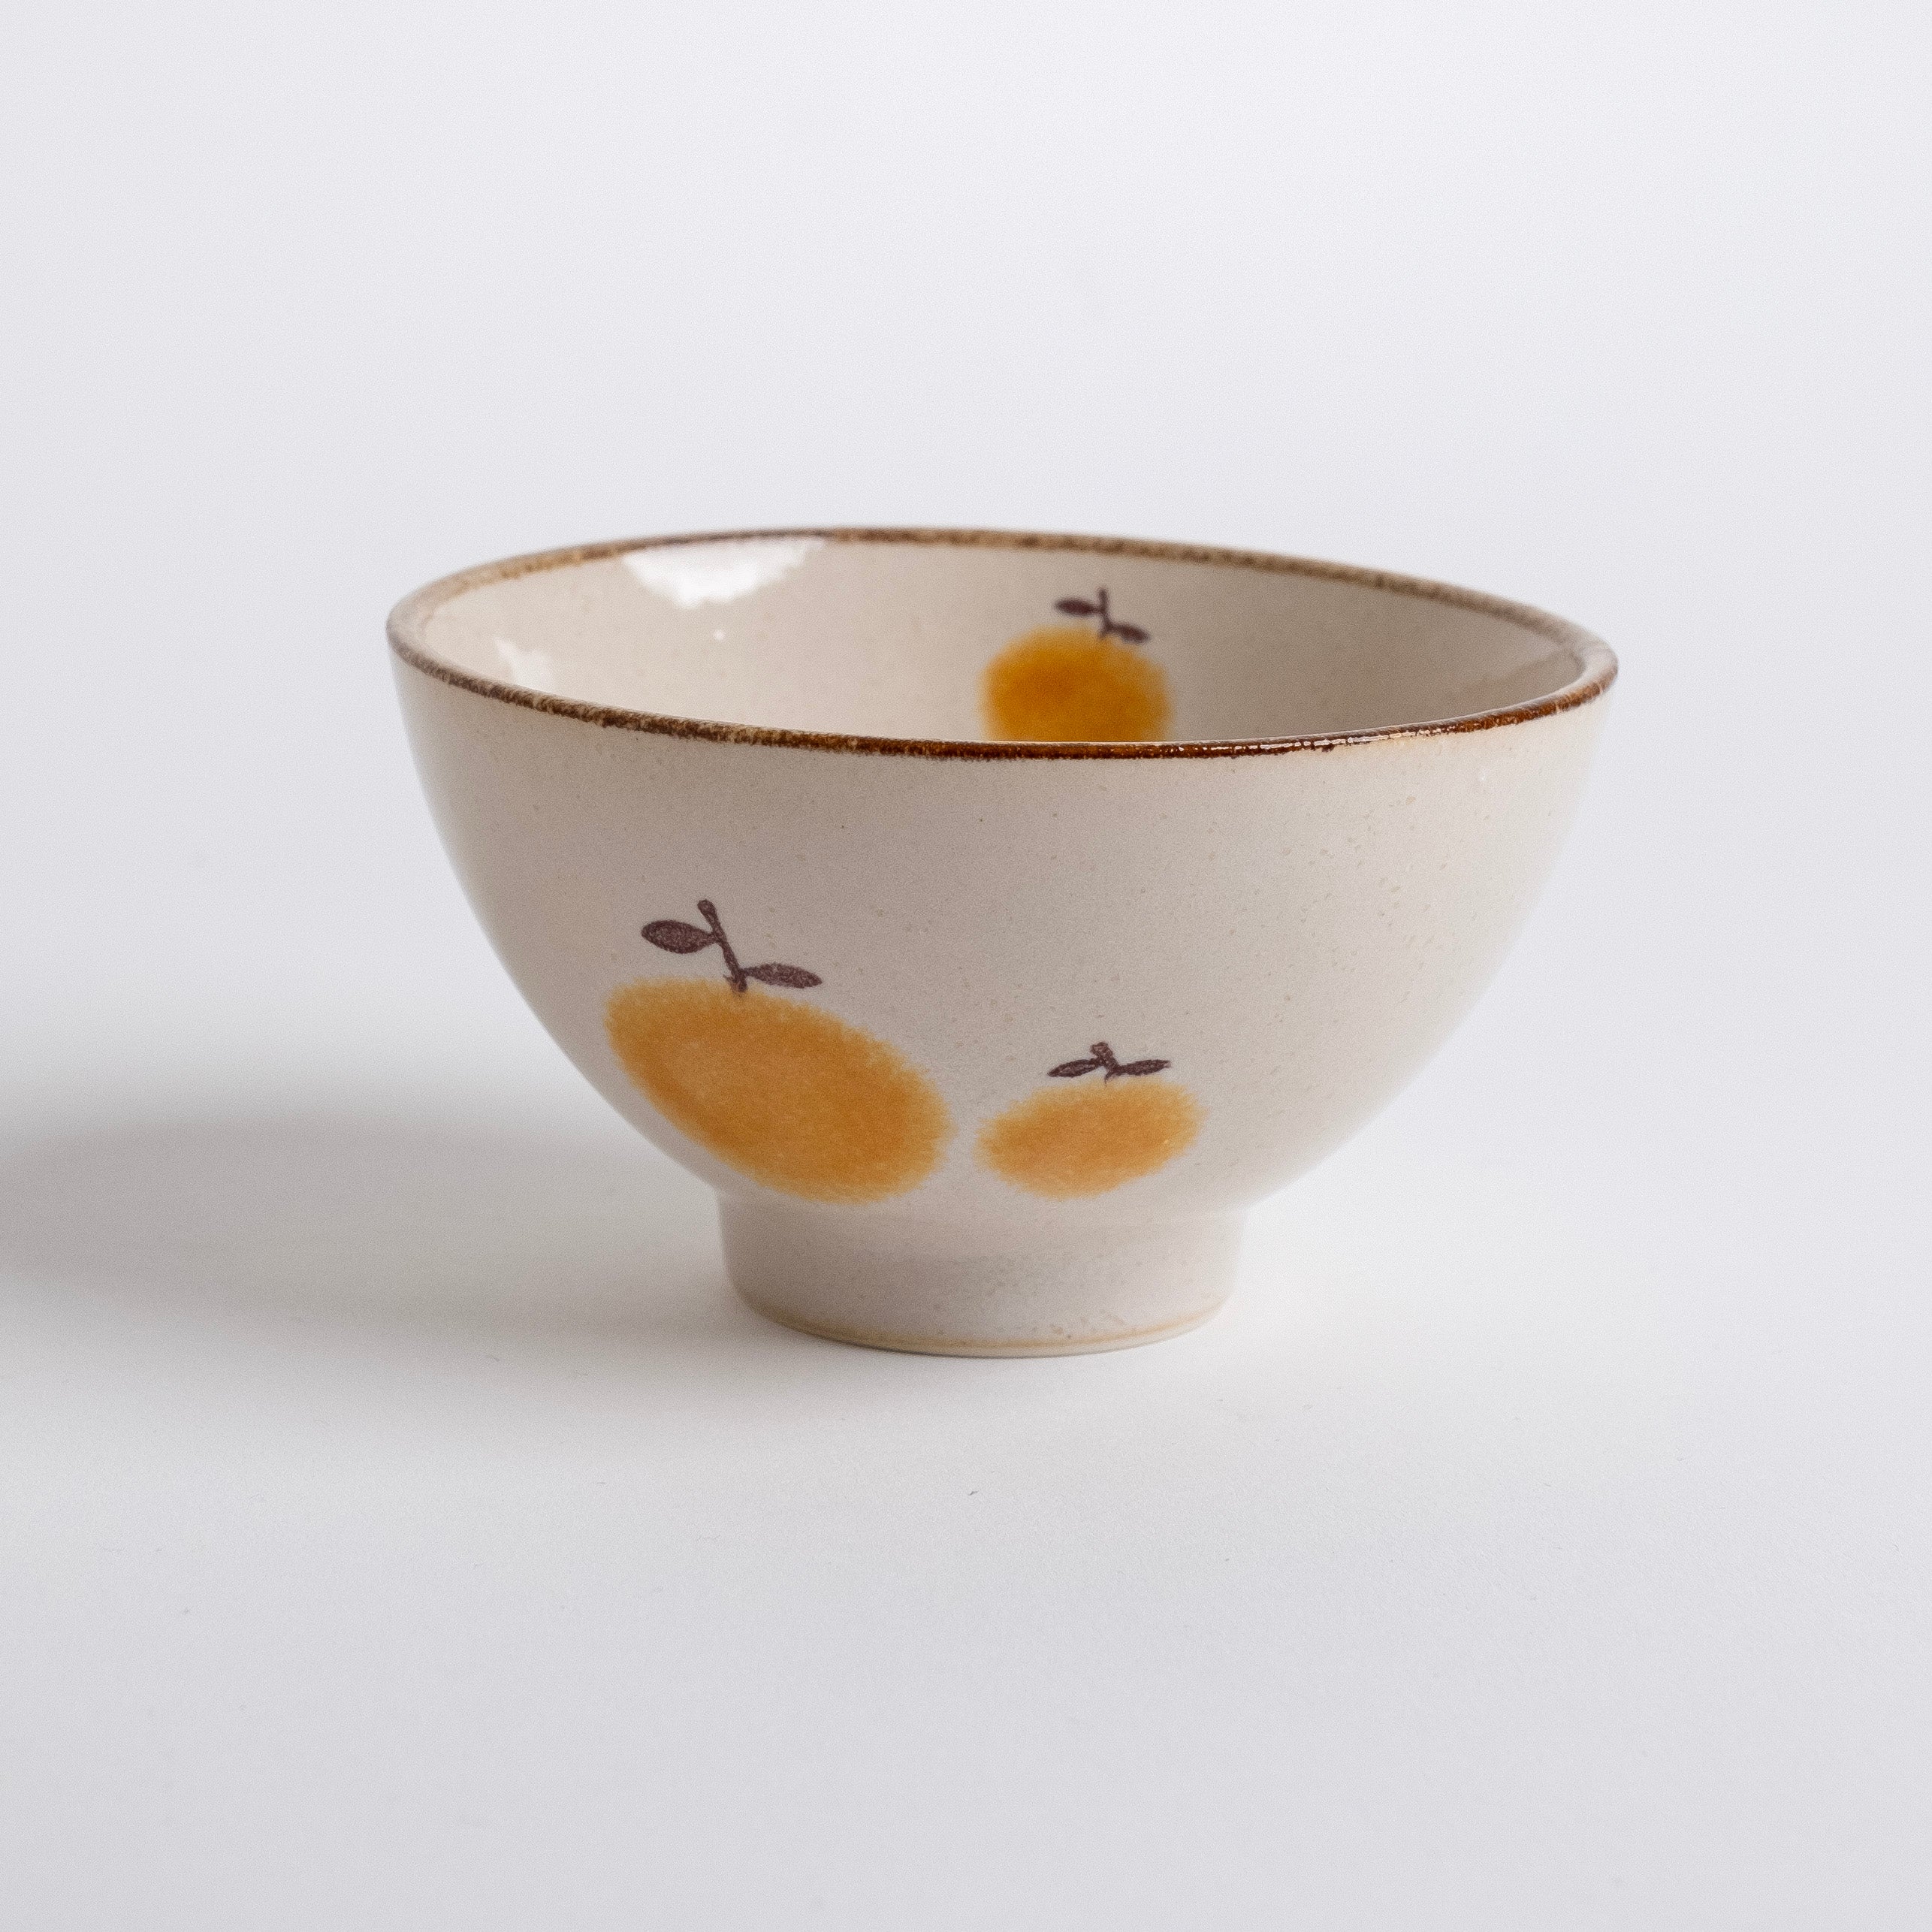 izawa-yuzu-bowl-1.jpg